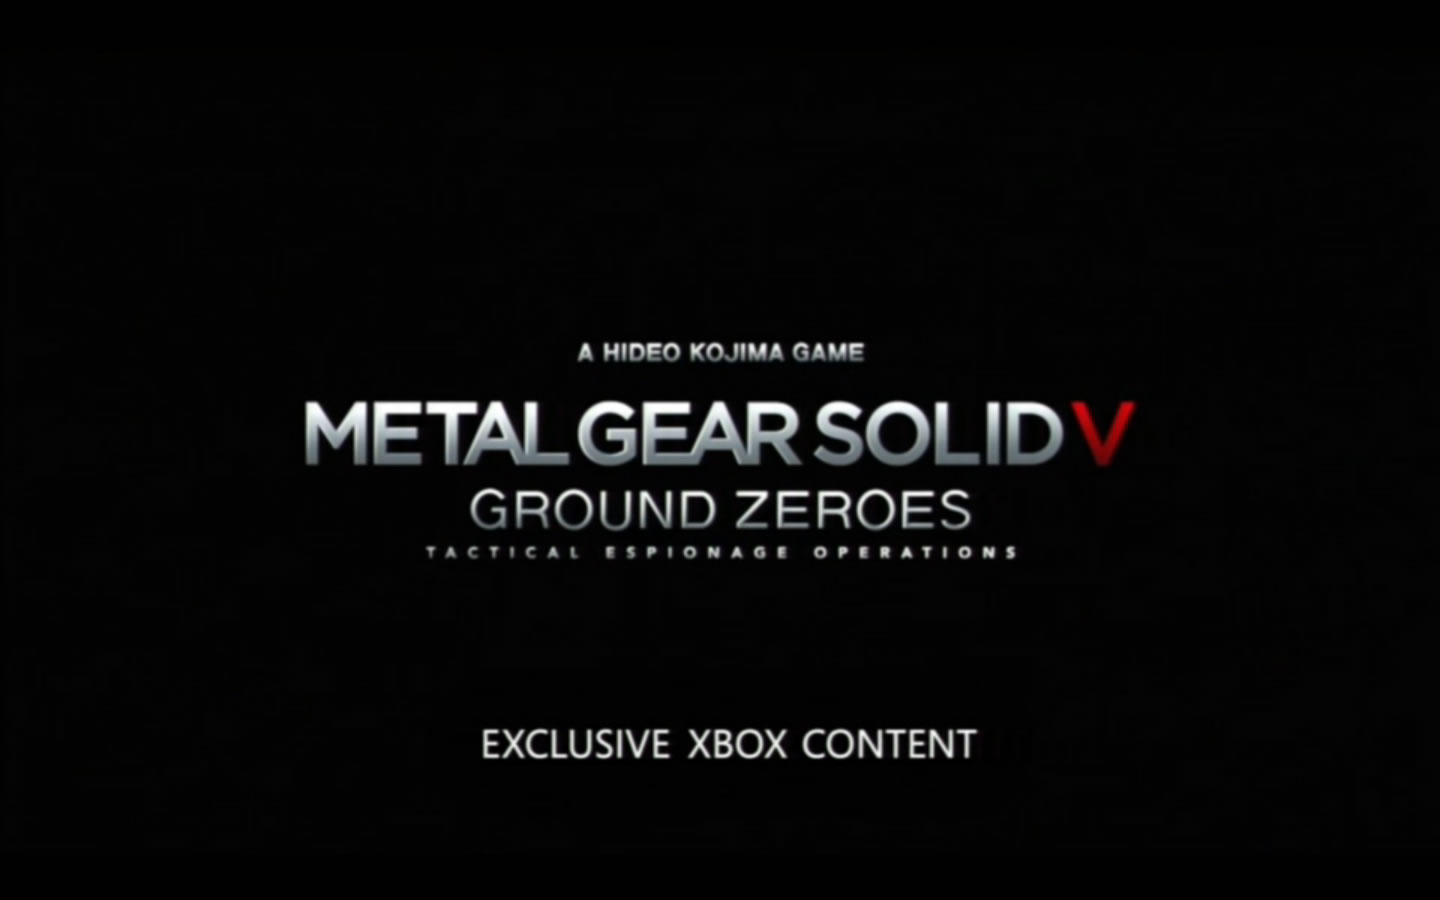 Metal Gear Solid V Ground Zeroes : Du contenu exclusif attendu sur Xbox One et Xbox 360